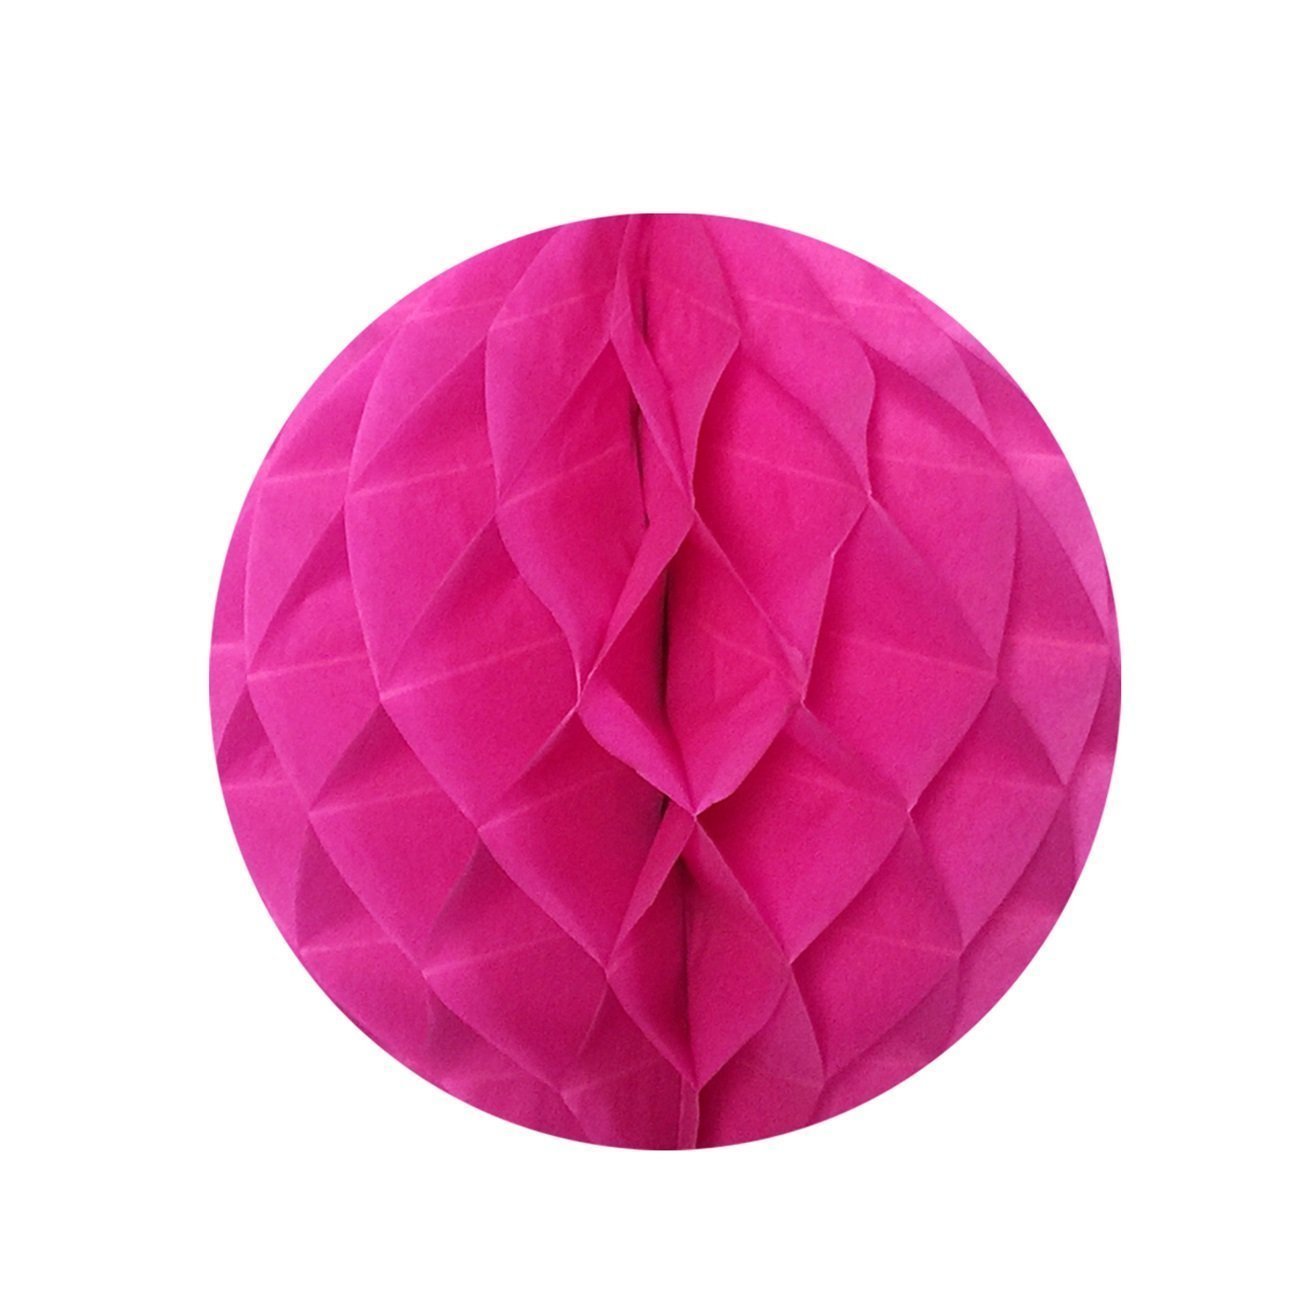 10pcs 4,6,8,10,12,14,16 Hot Pink Tissue Paper Honeycomb